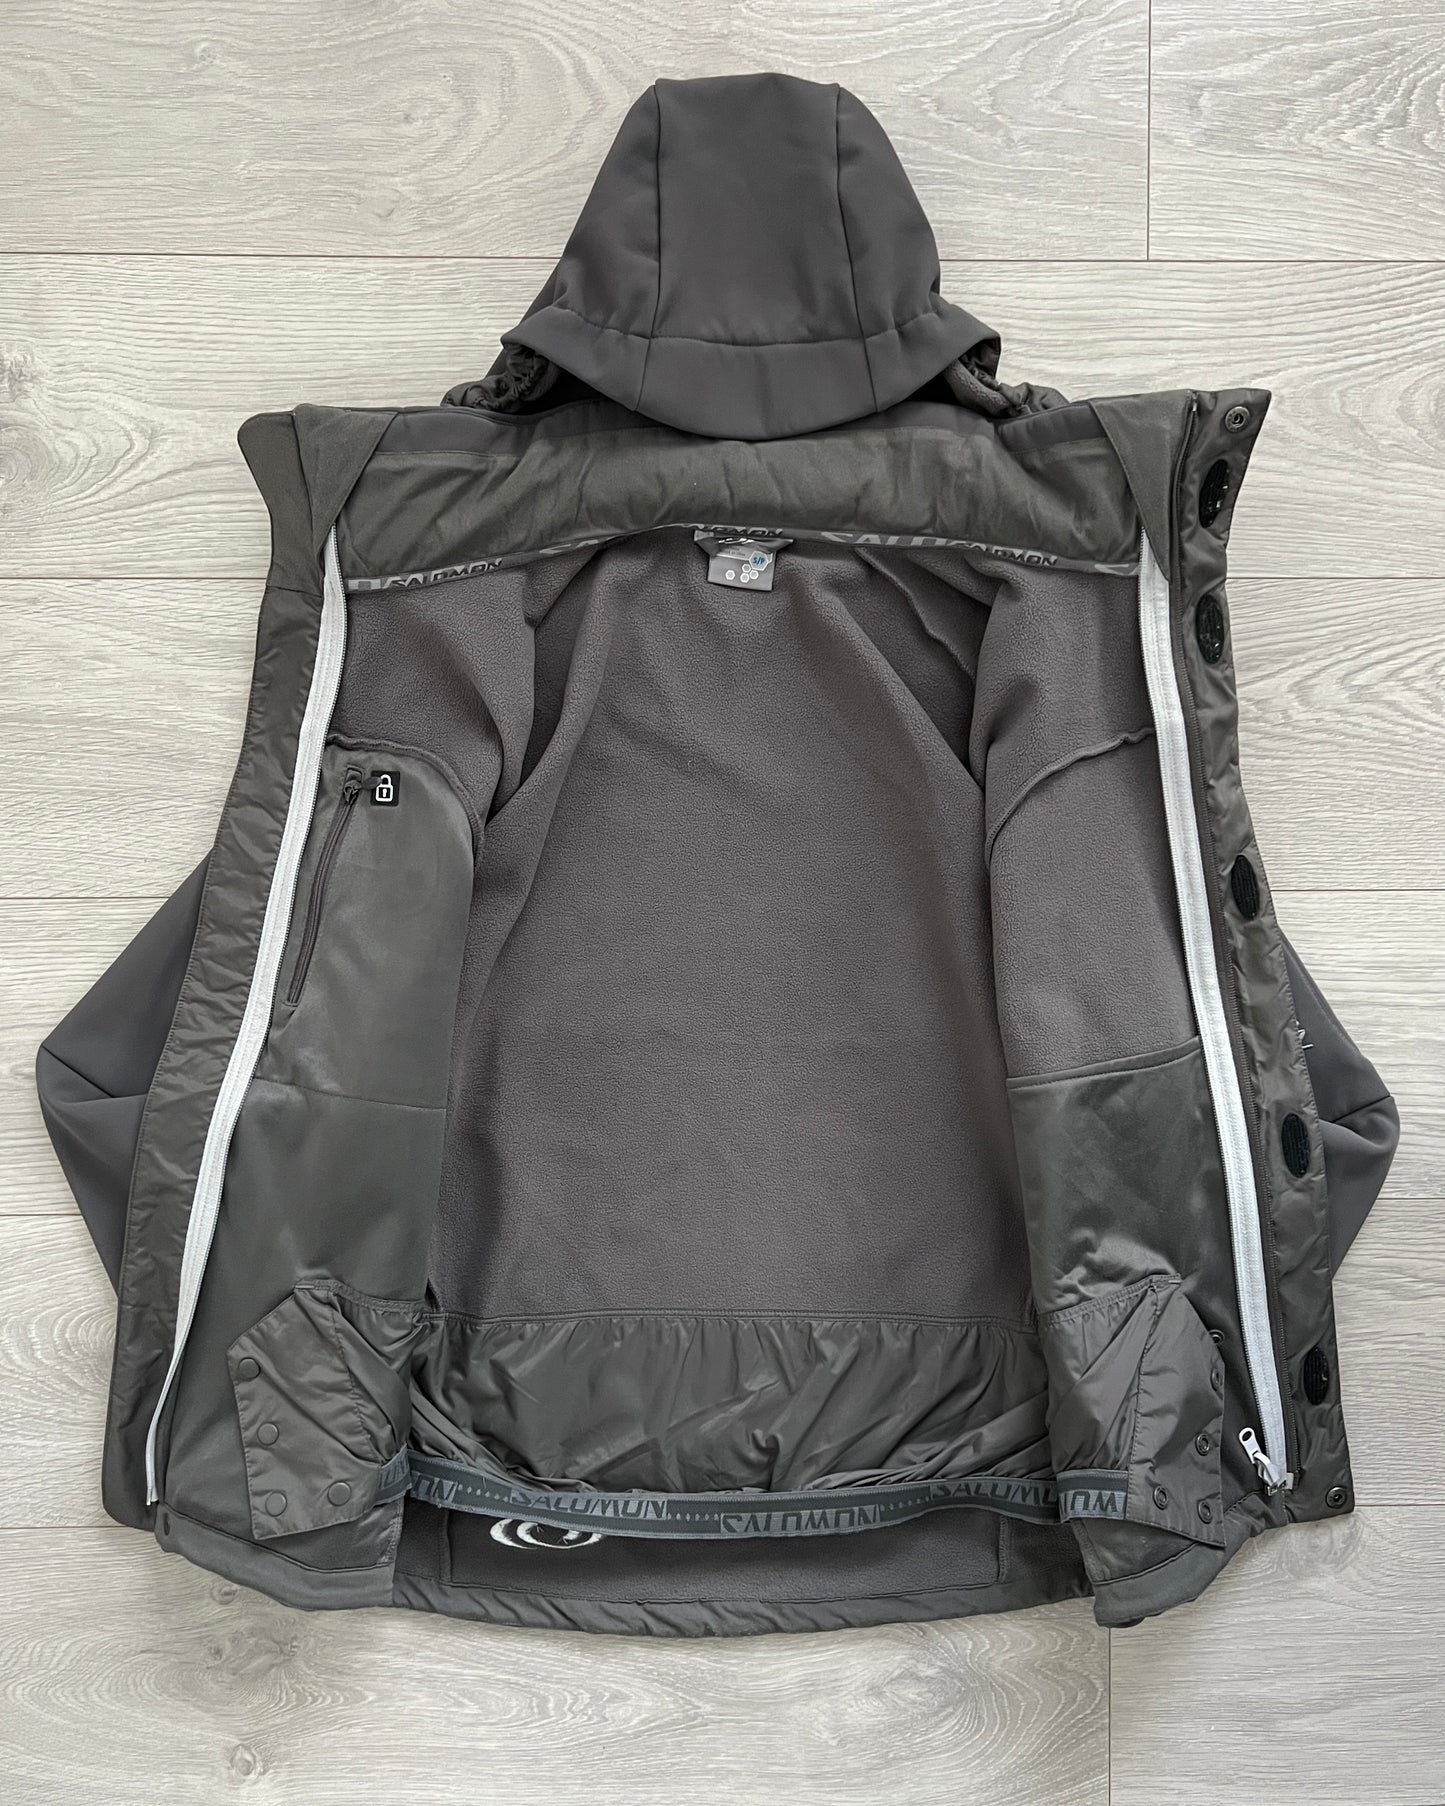 Salomon 00s Technical Fleece Lined Panelled Softshell Jacket - Size S